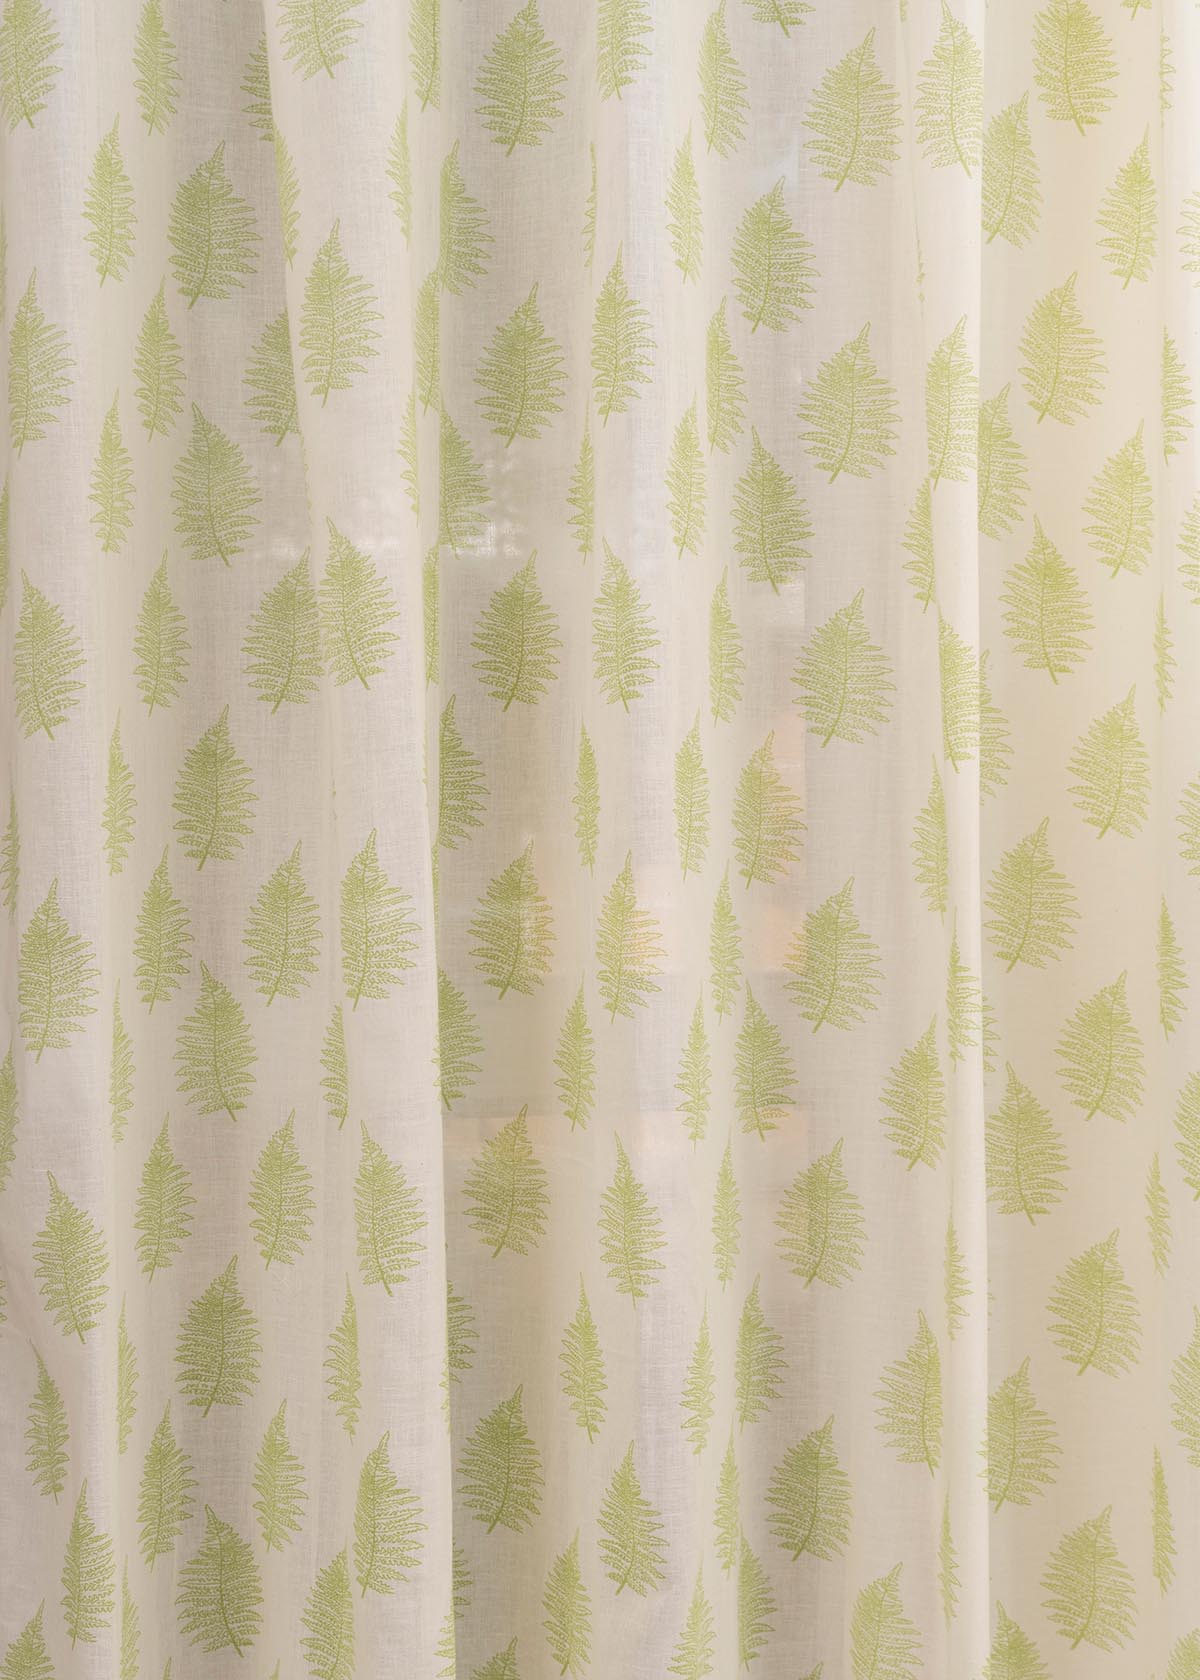 Floating Ferns printed sheer Fabric - Green